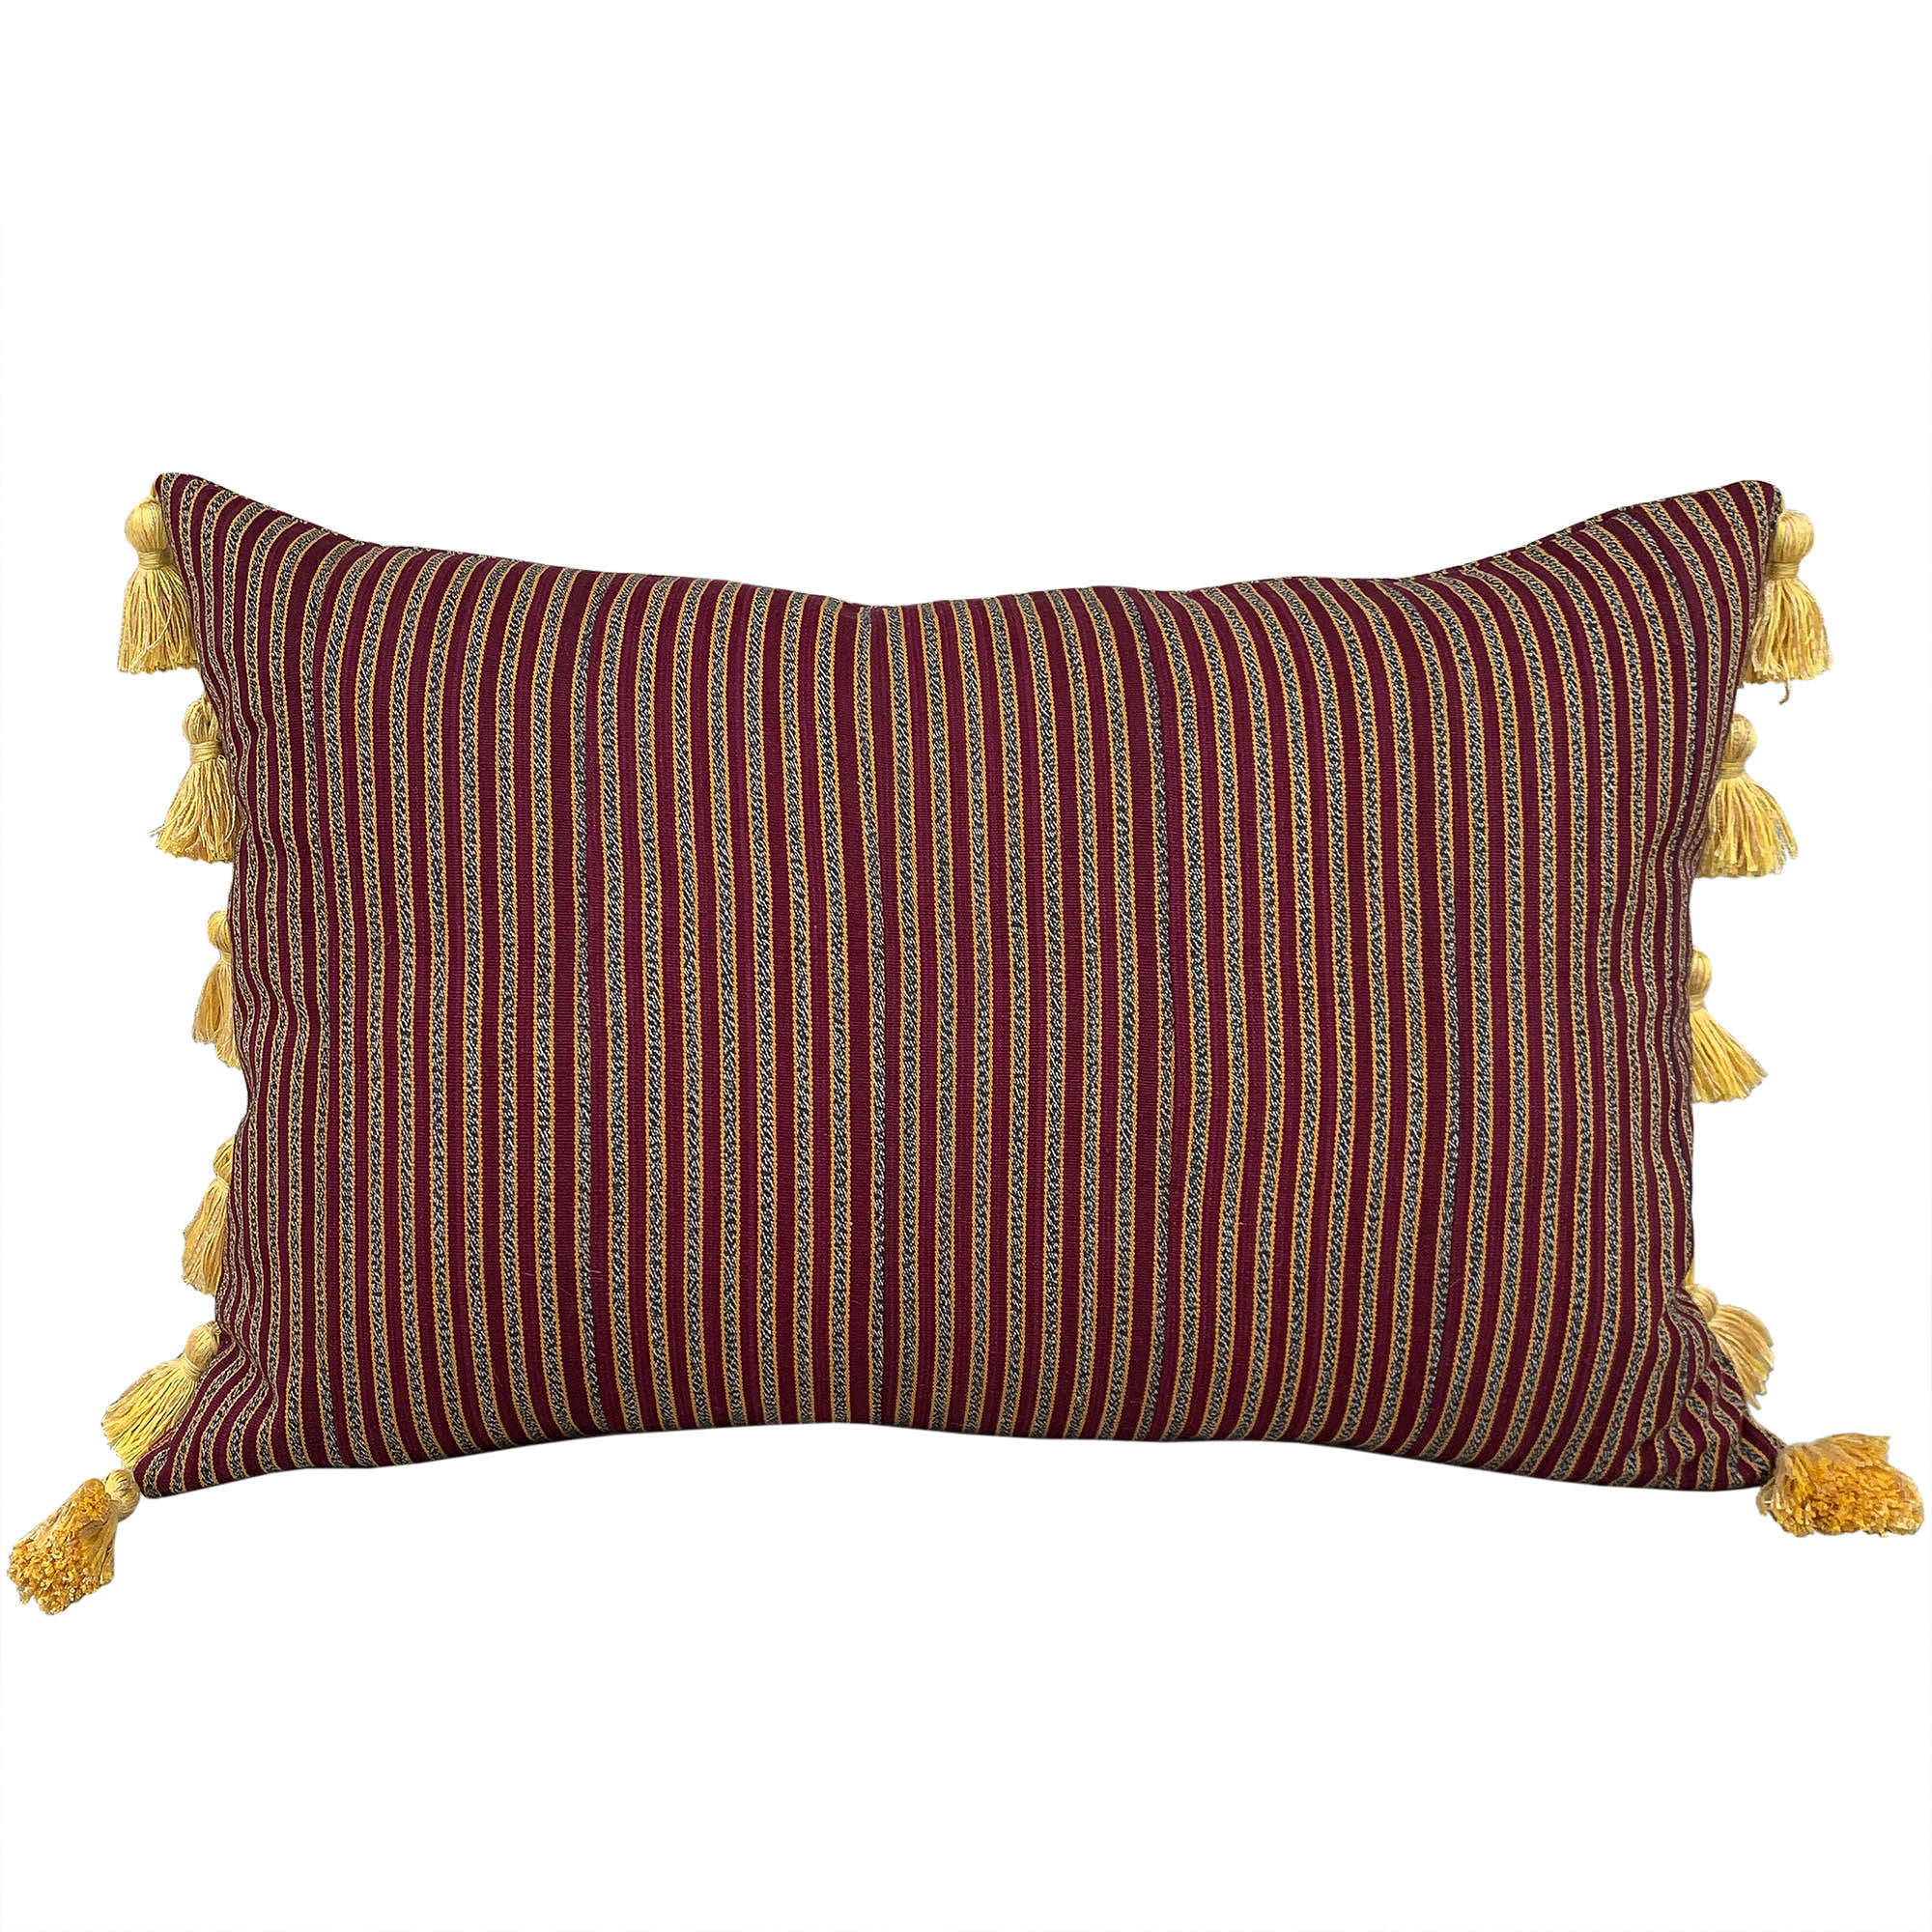 Claret Ewe cushion with tassels